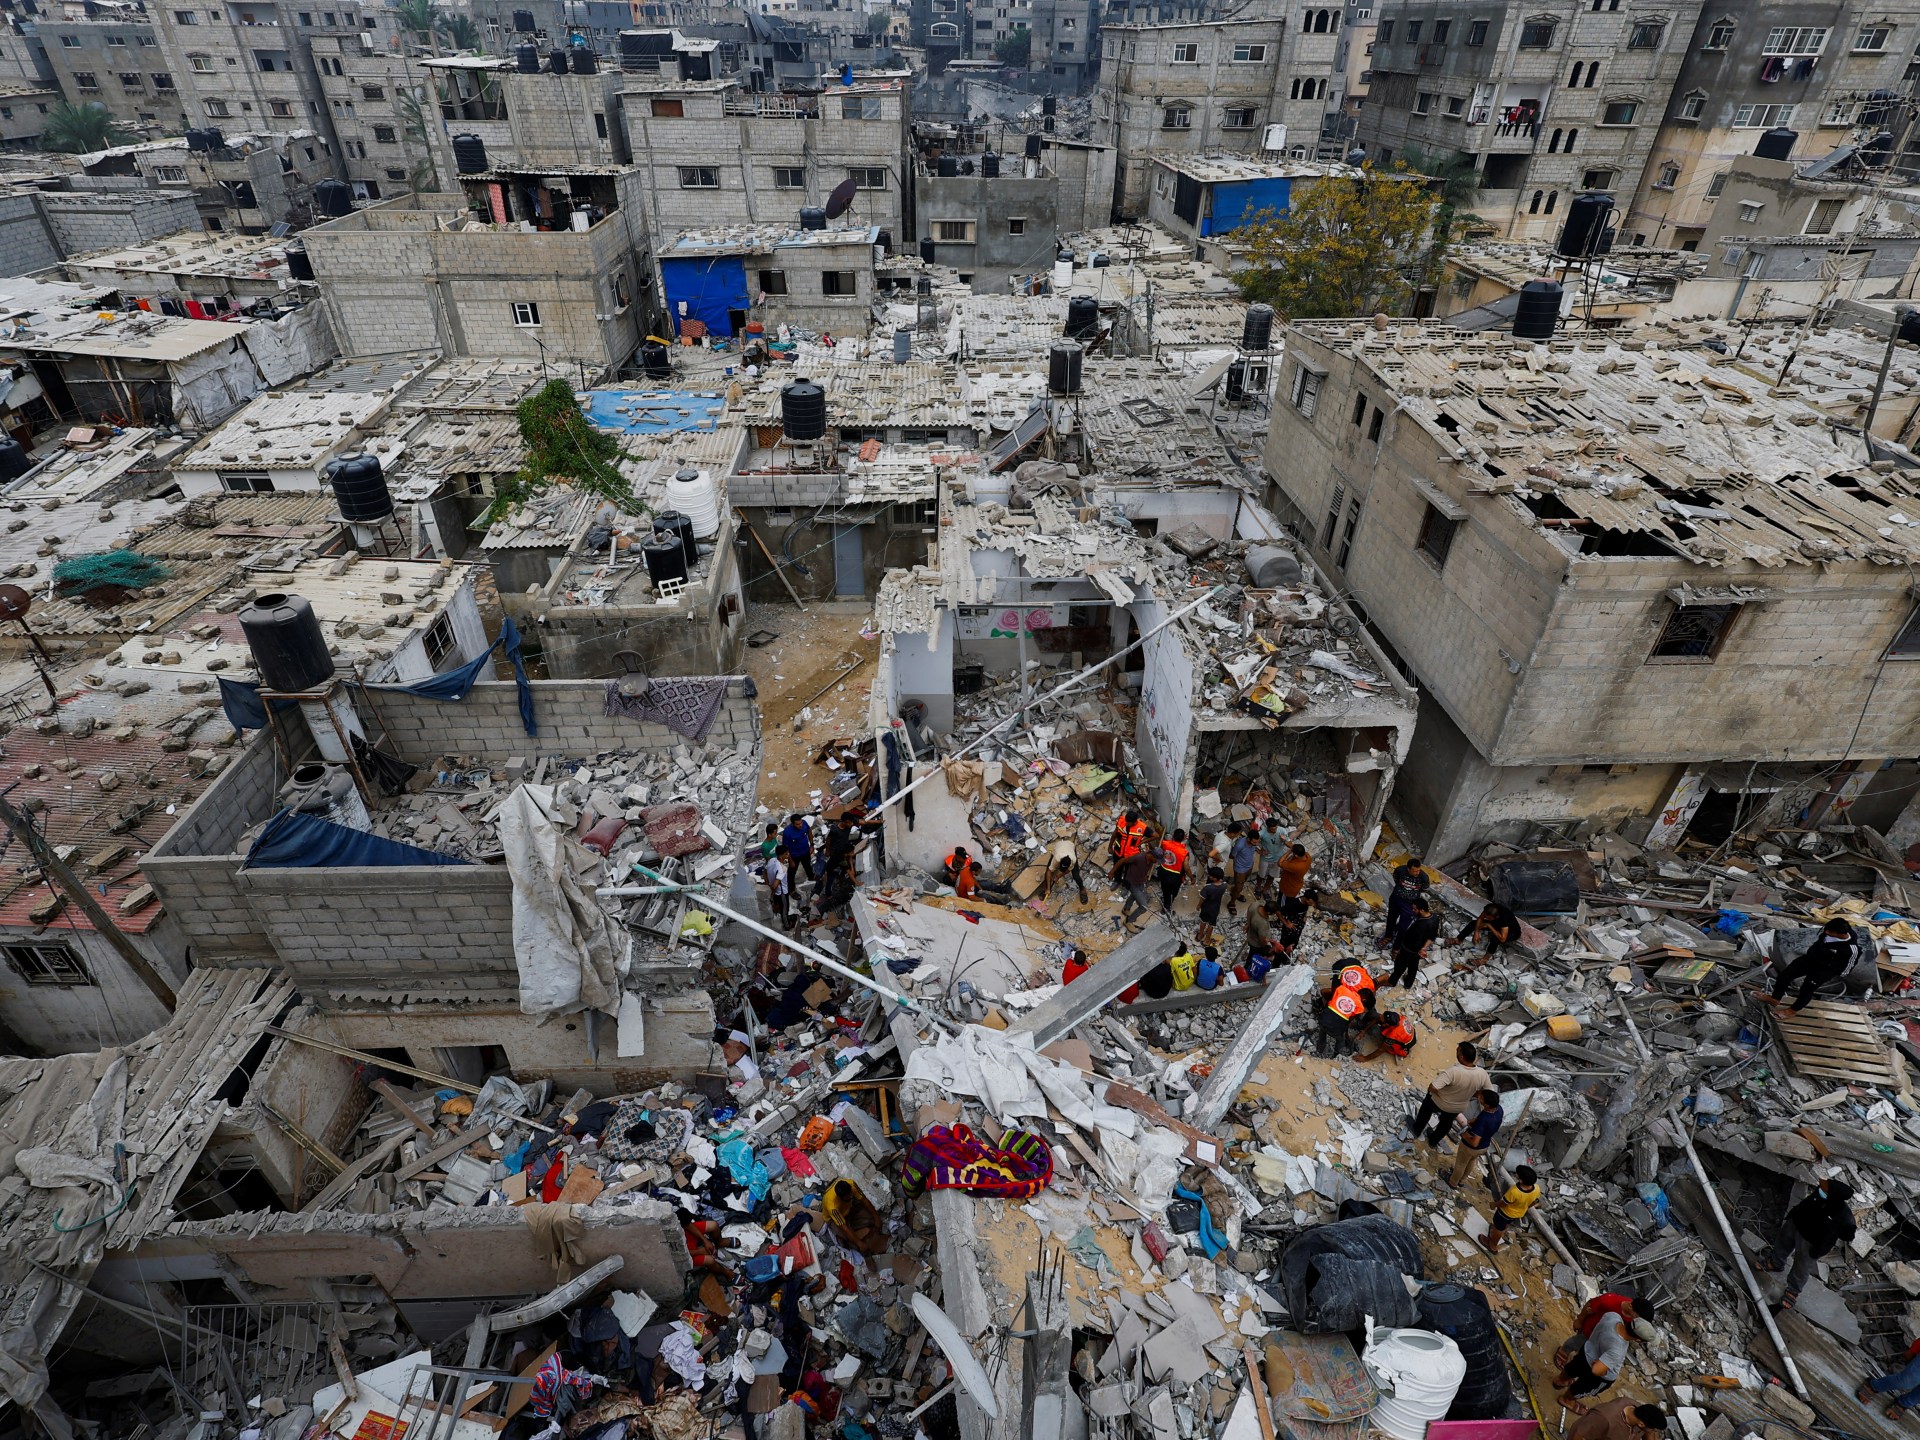 Impeding aid to Gaza could be crime under ICC jurisdiction, says prosecutor